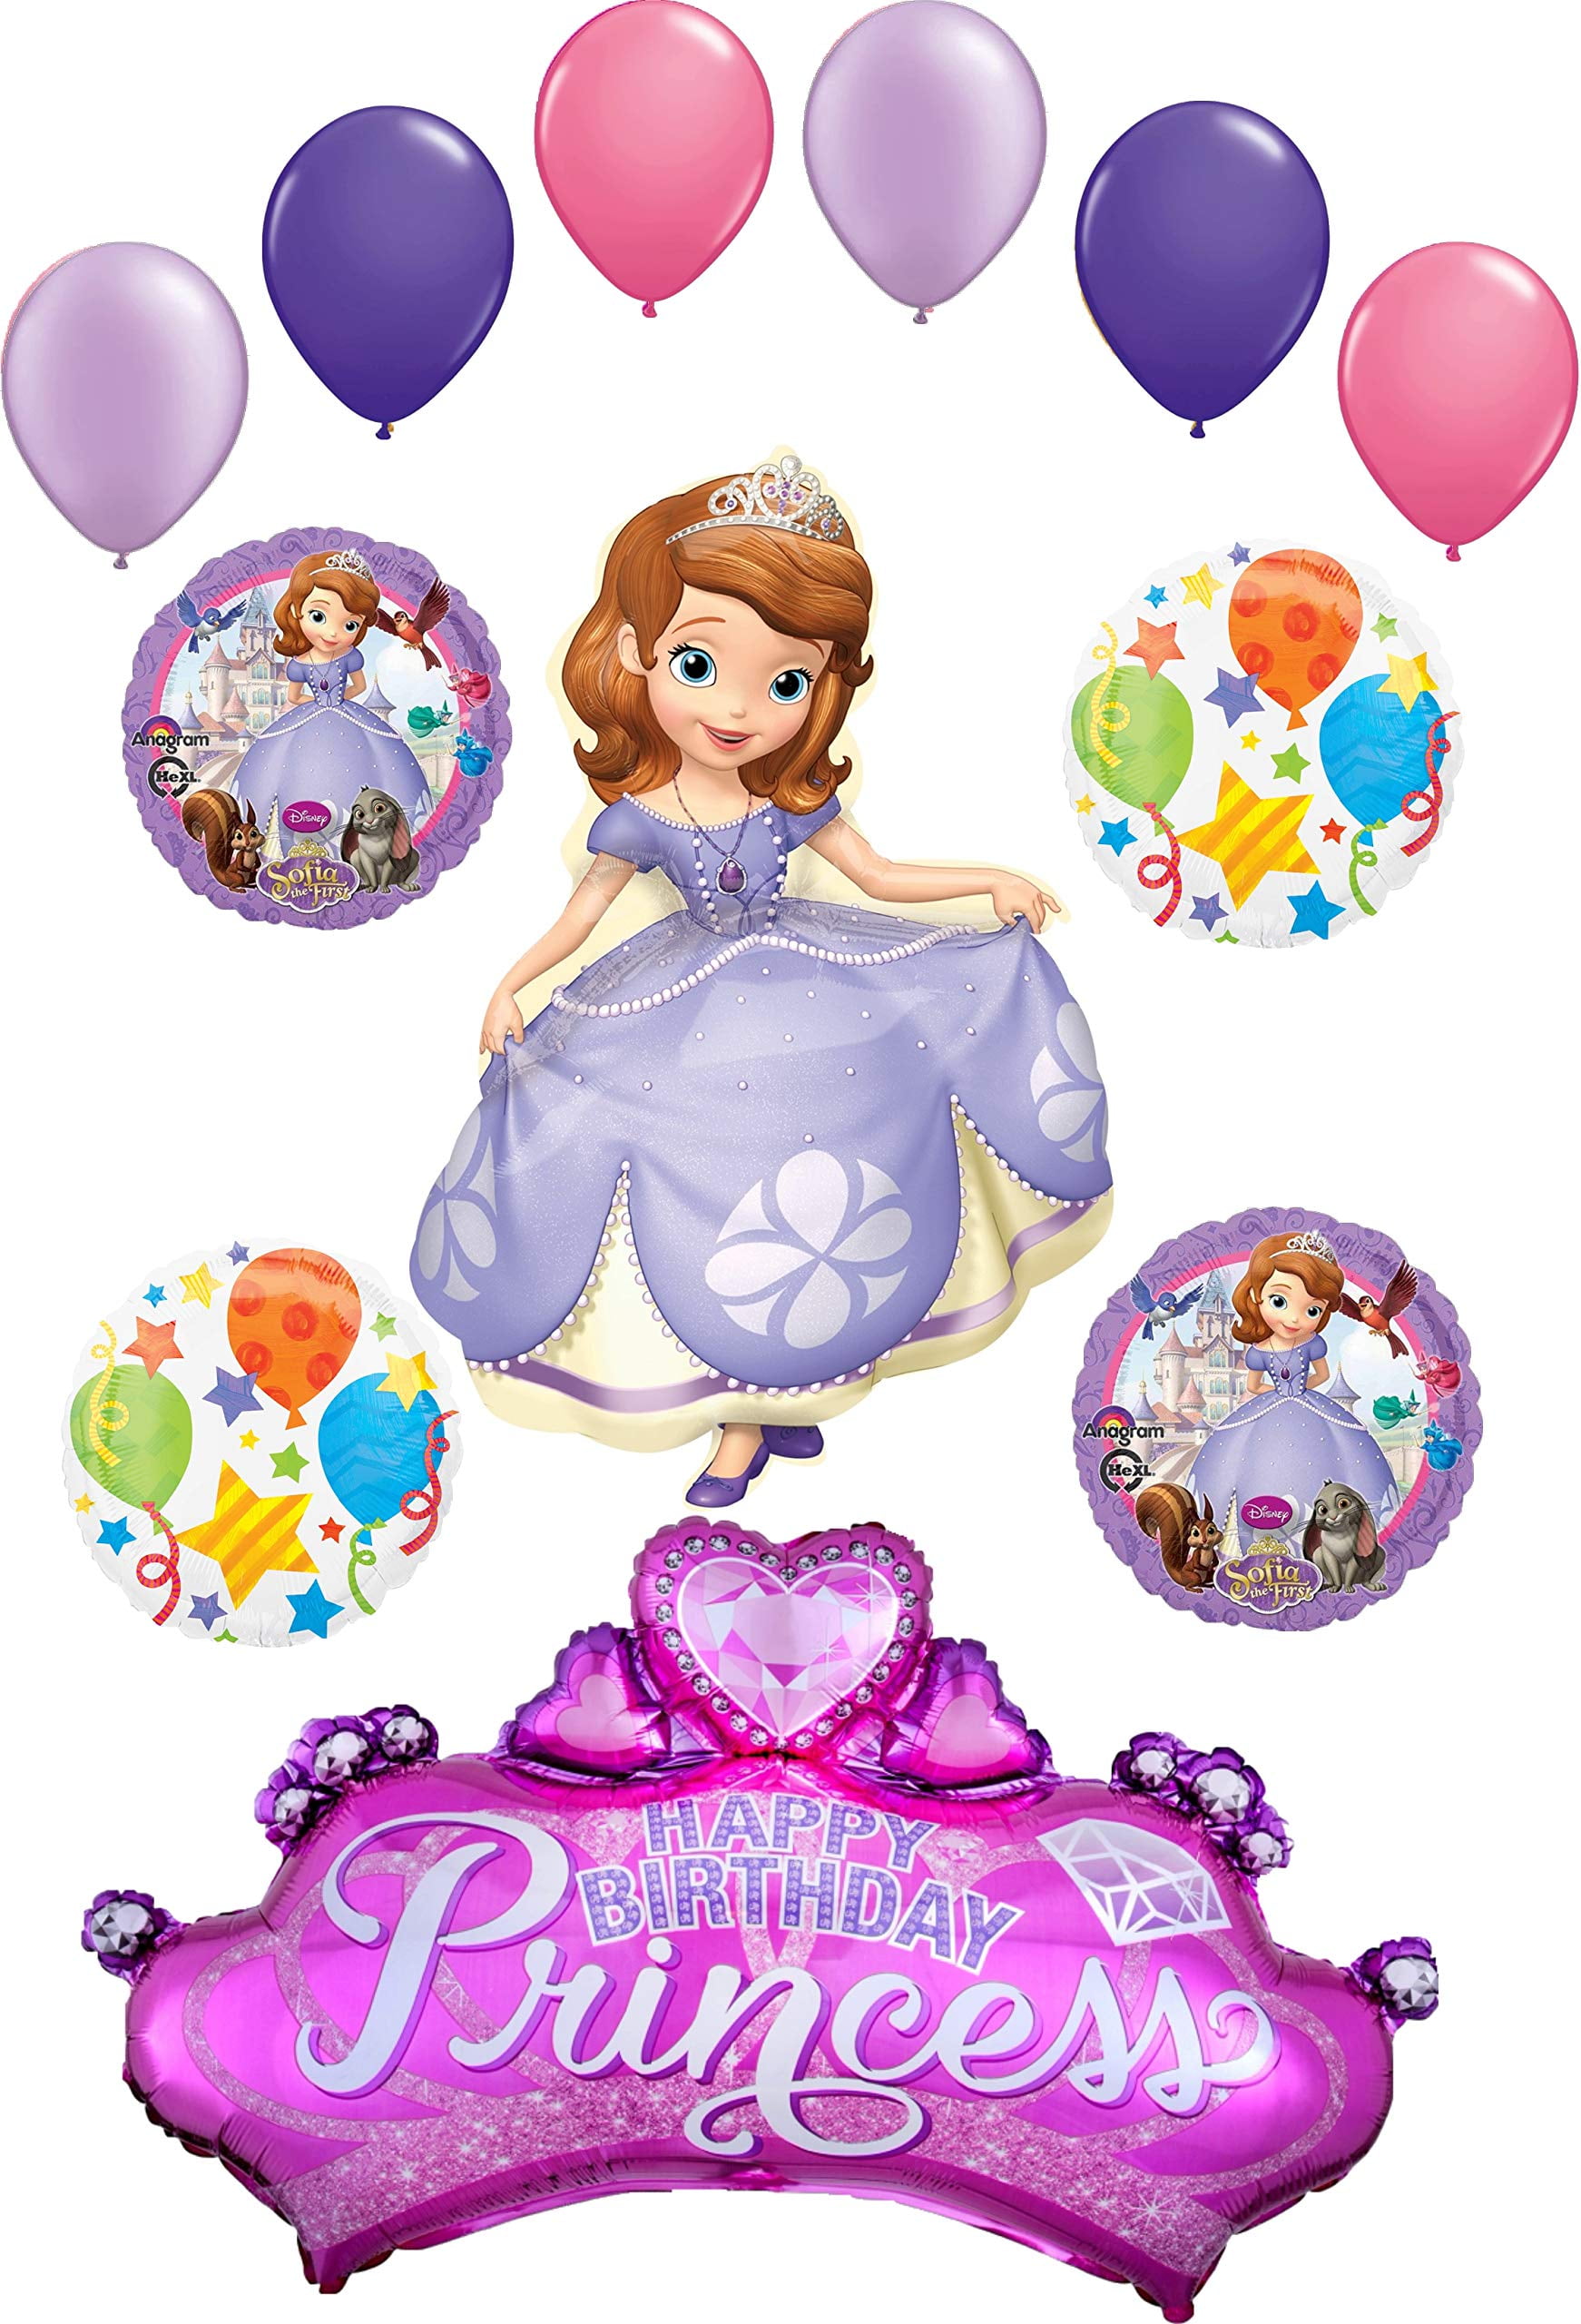 6 new balloons of Princess Sofia party balloons 